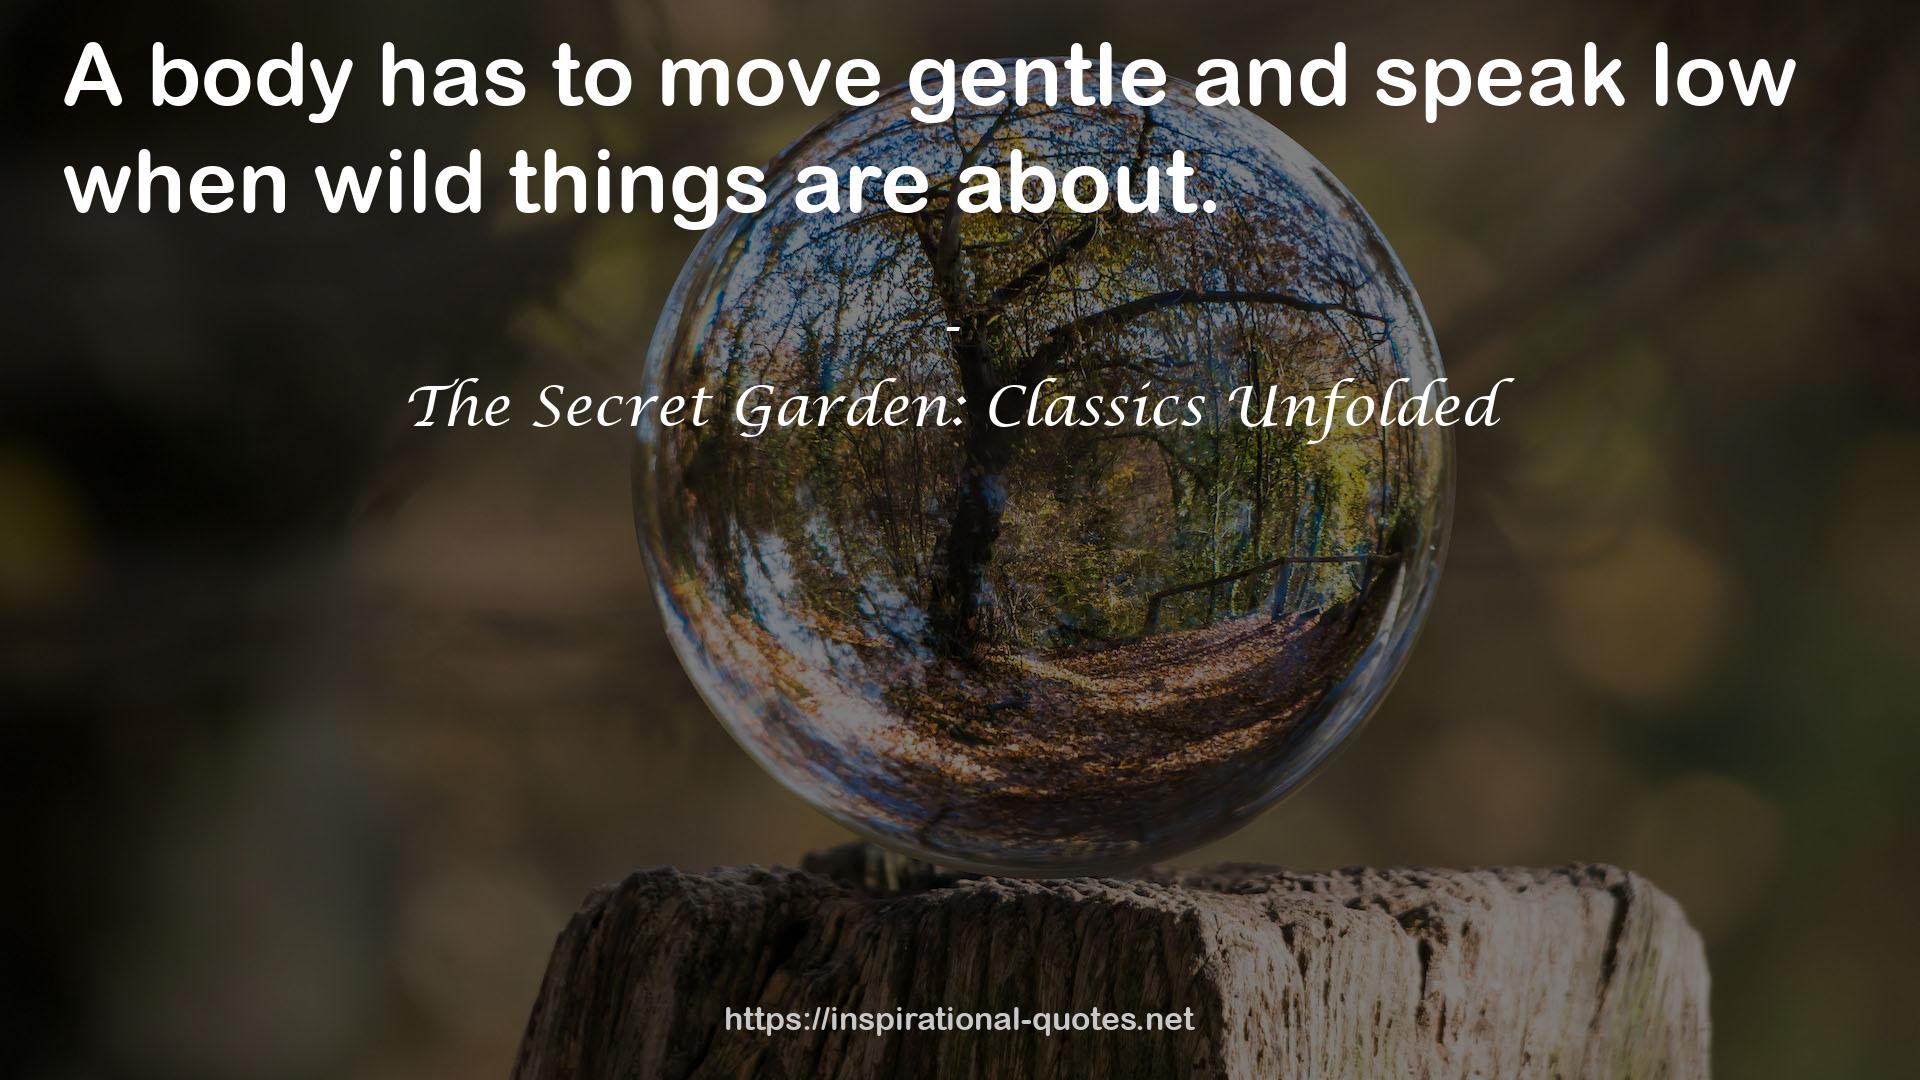 The Secret Garden: Classics Unfolded QUOTES